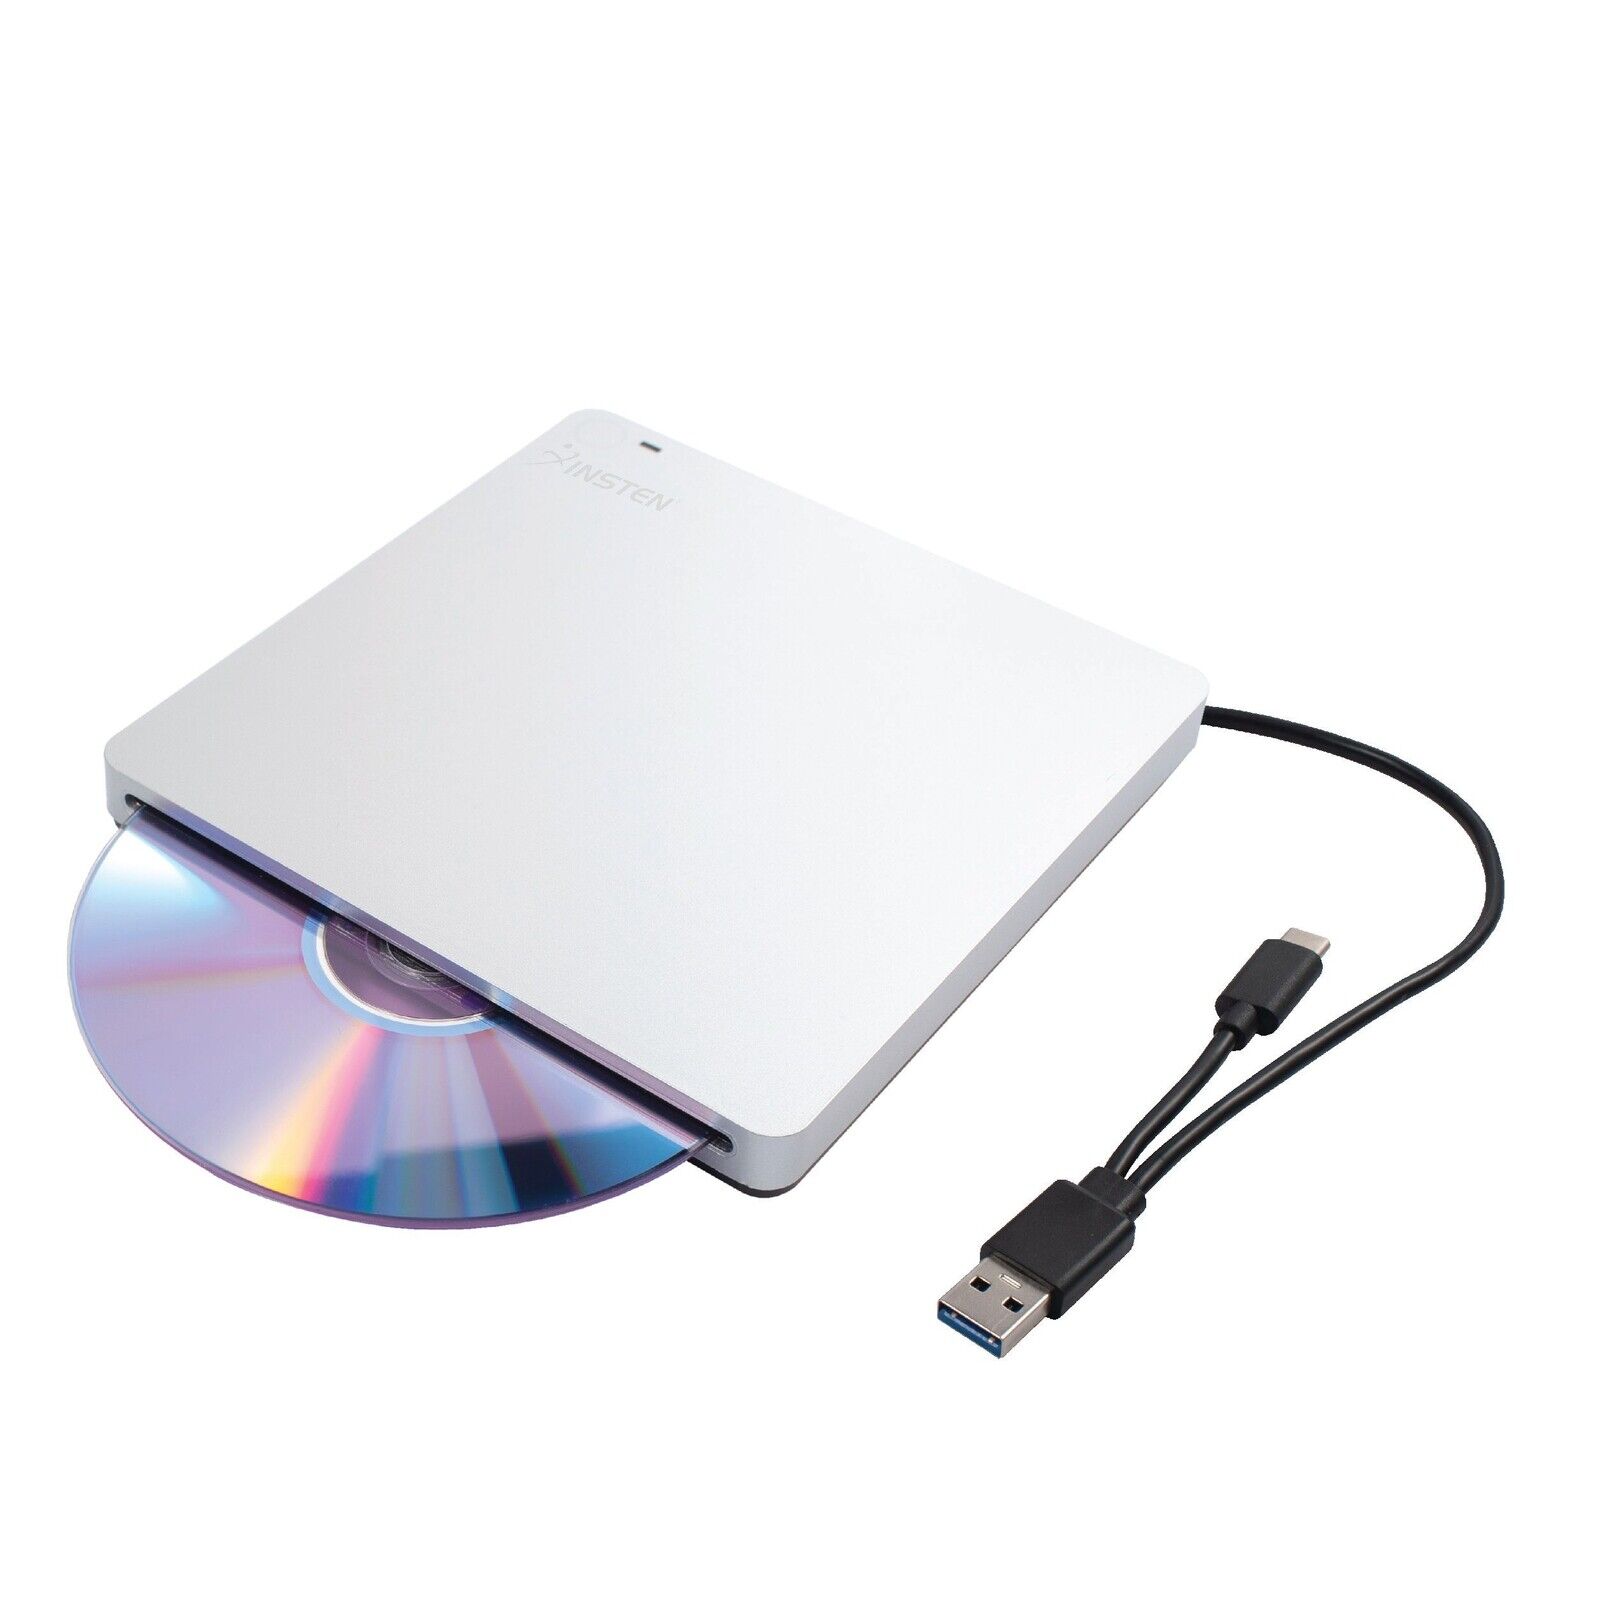 Portable Slot in DVD Drive USB 3.0 USB C, DVD +/- RW For Mac Laptop PC